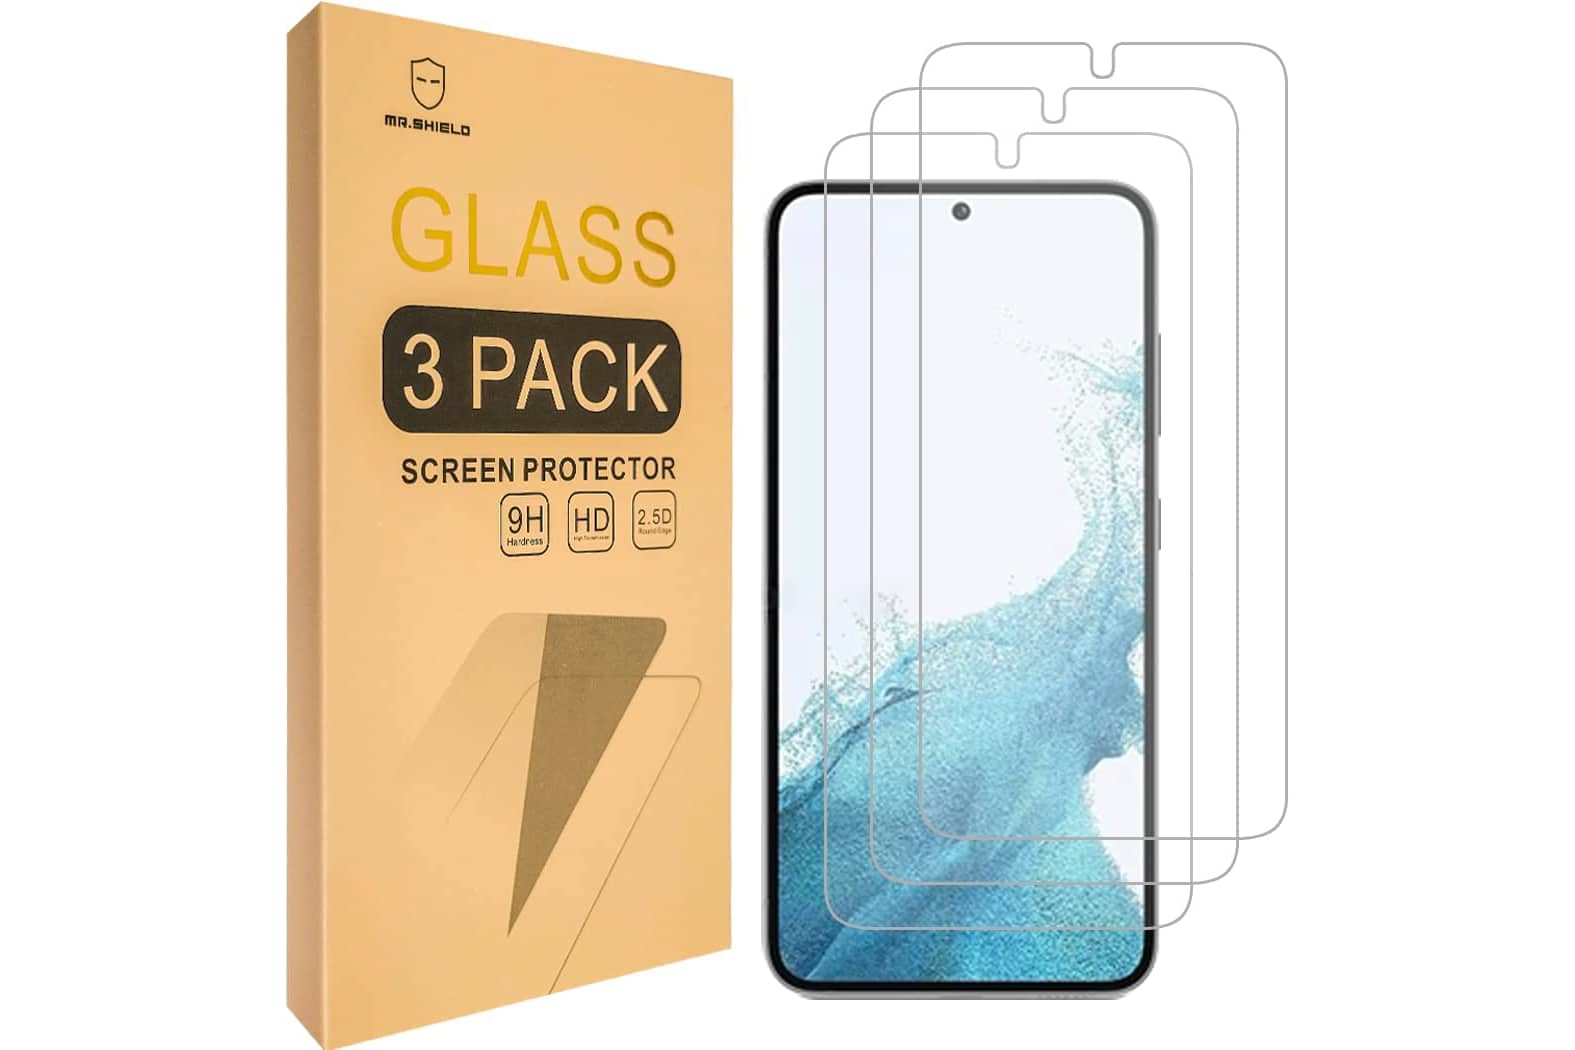 EZ] Samsung Galaxy S23 EZ Tempered Glass Screen Protector - 3Pack –  Whitestonedome